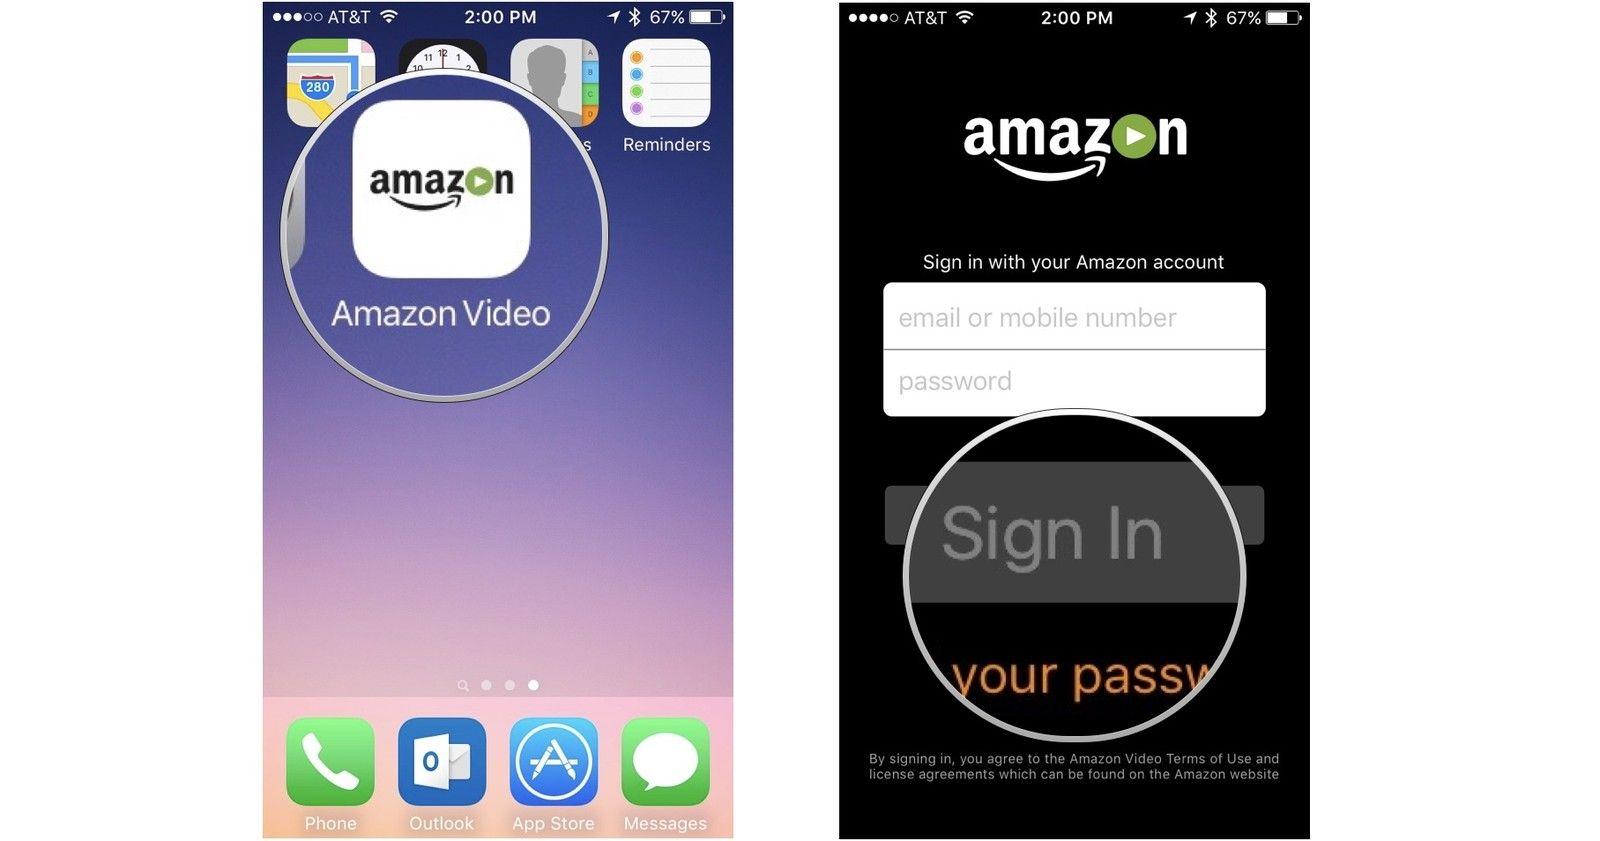 Amazon iPhone App Logo - How to watch Amazon Prime videos on iPhone and iPad